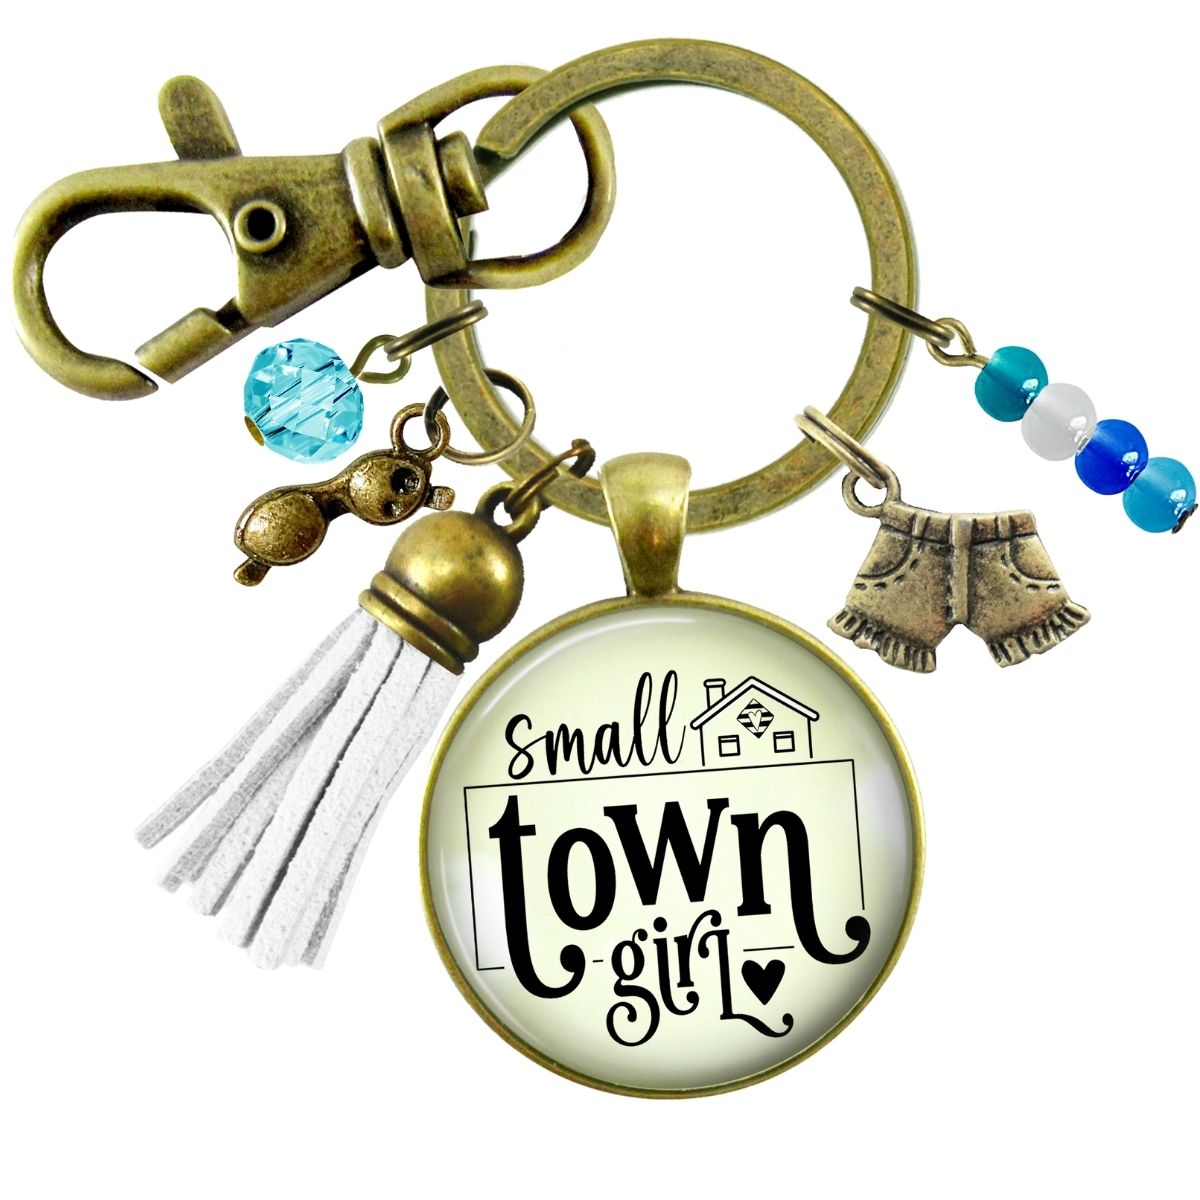 Handmade Gutsy Goodness Jewelry Small Town Girl Keychain Boho Handmade Jewelry Denim Shorts, Sunglasses, Tassel Charms & Card